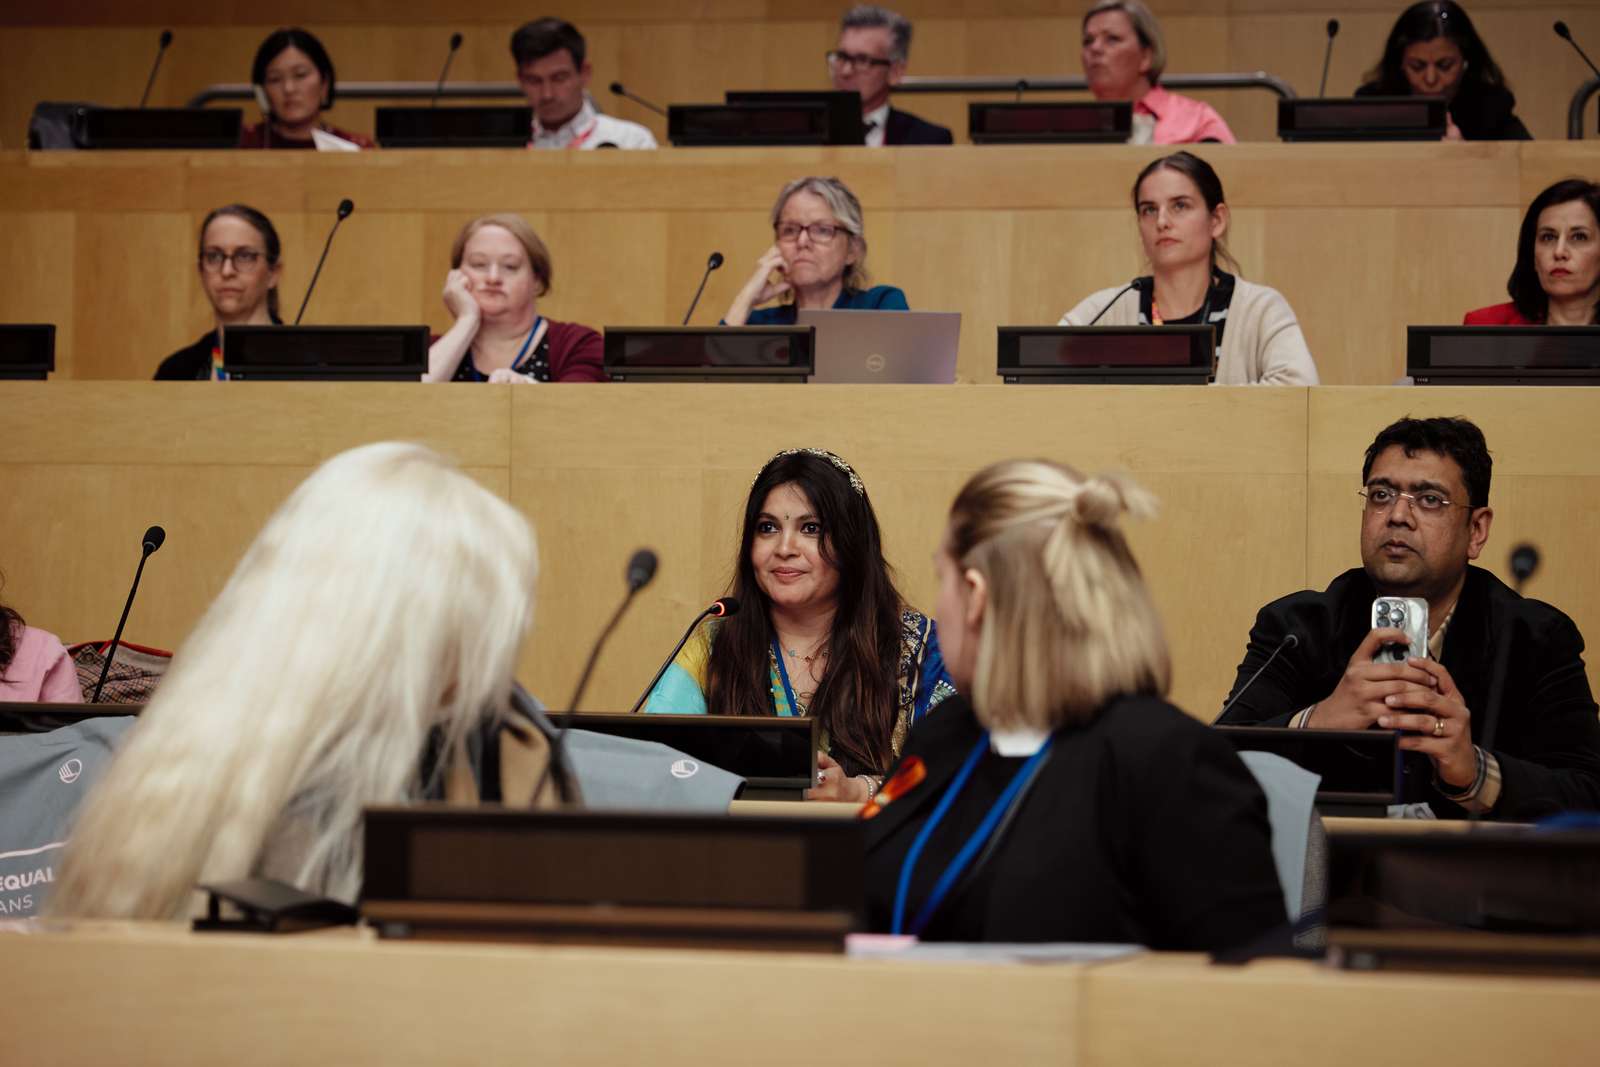 Attendee at panel debate, Dr. Nandita Shah, PhD